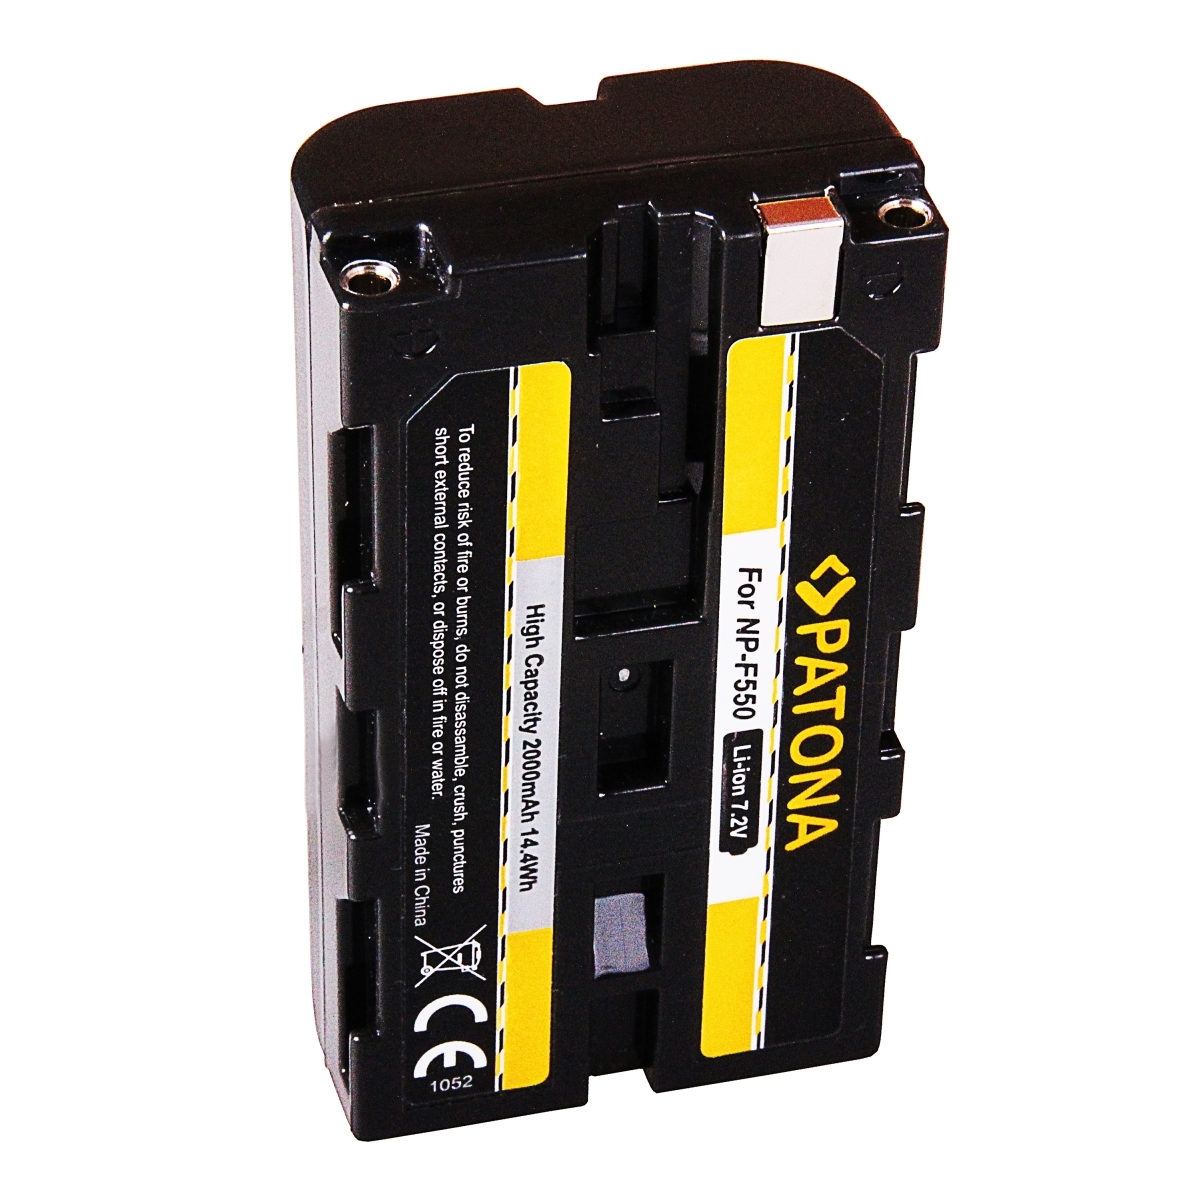 NP-F 550 Li-Ion battery for Sony,2200 mAh 7.2-7.4V